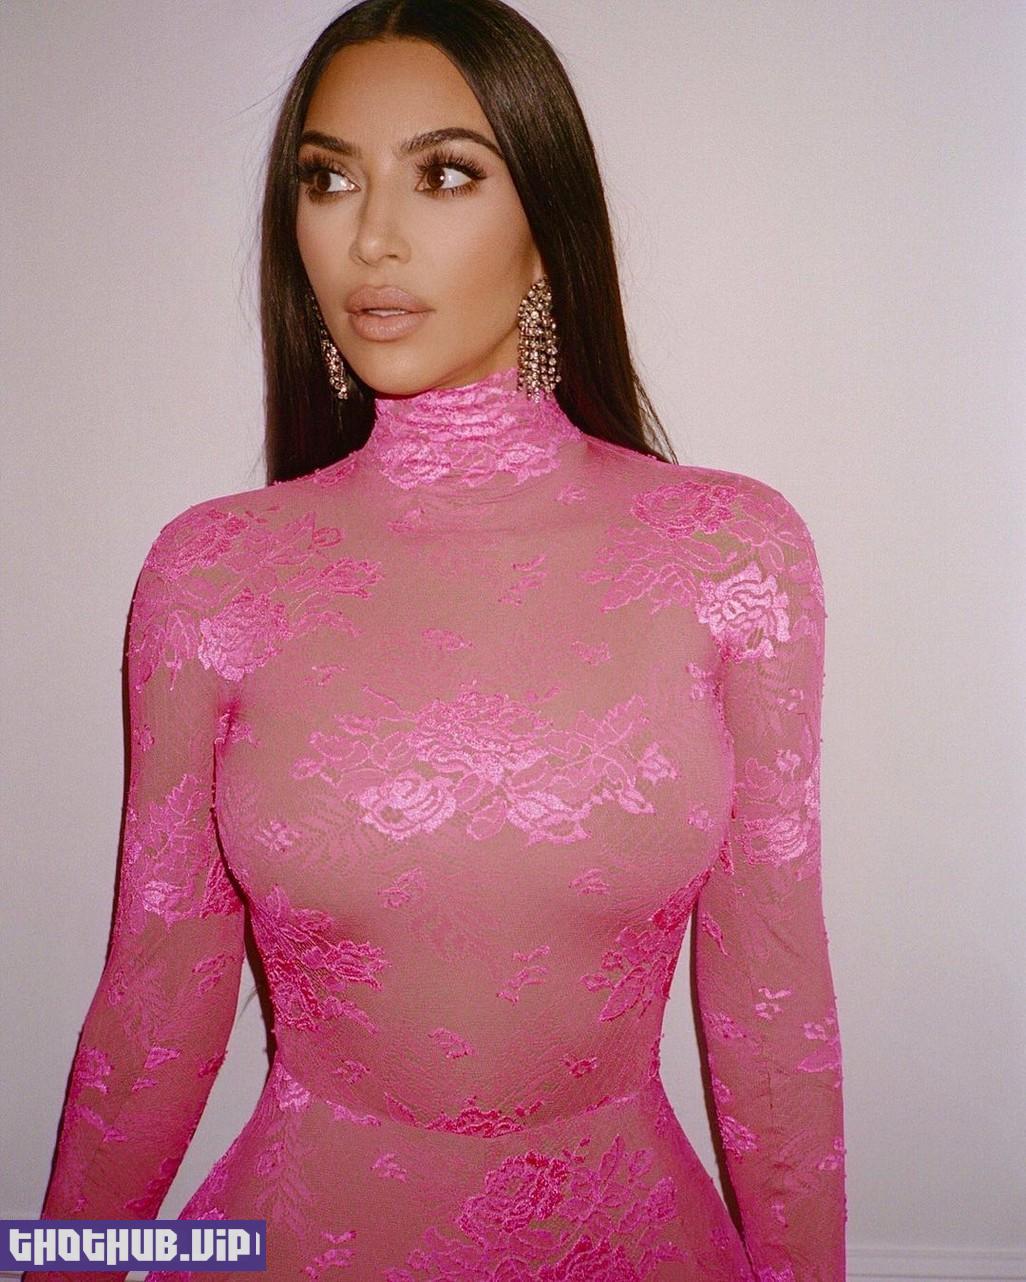 Kim Kardashian Hot 5 Photos